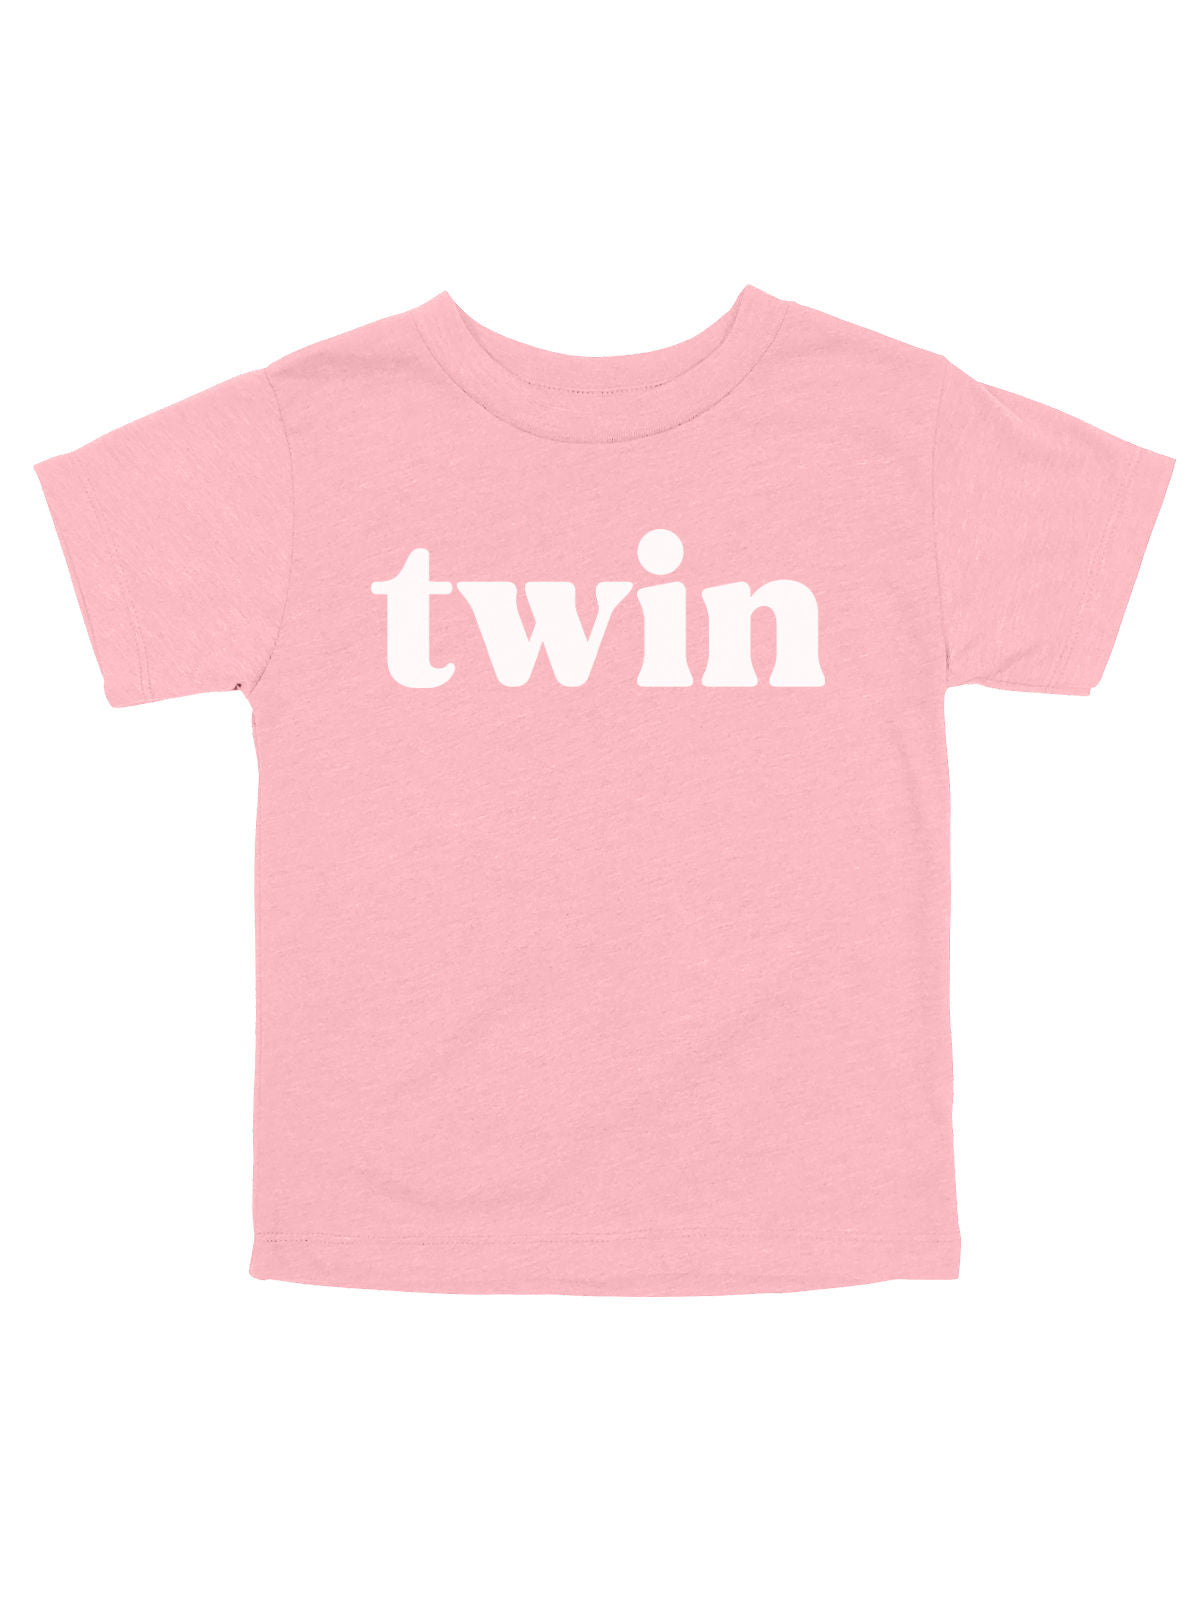 Kids Twin Shirt in Pink